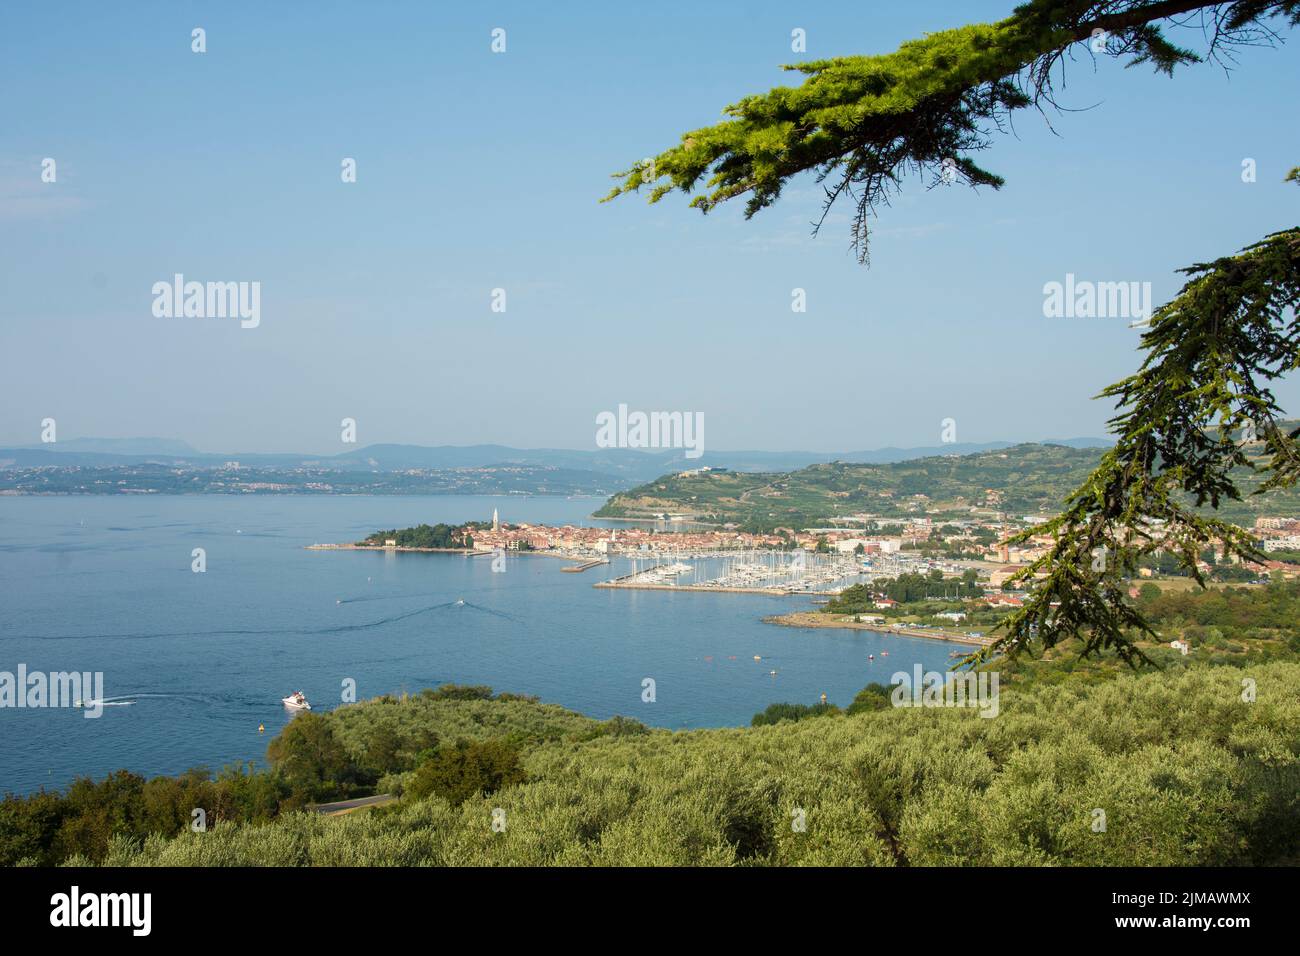 Panorama view on the historic town Izola with its marina on the Adriatic Sea. Slovenia, Europe. Stock Photo